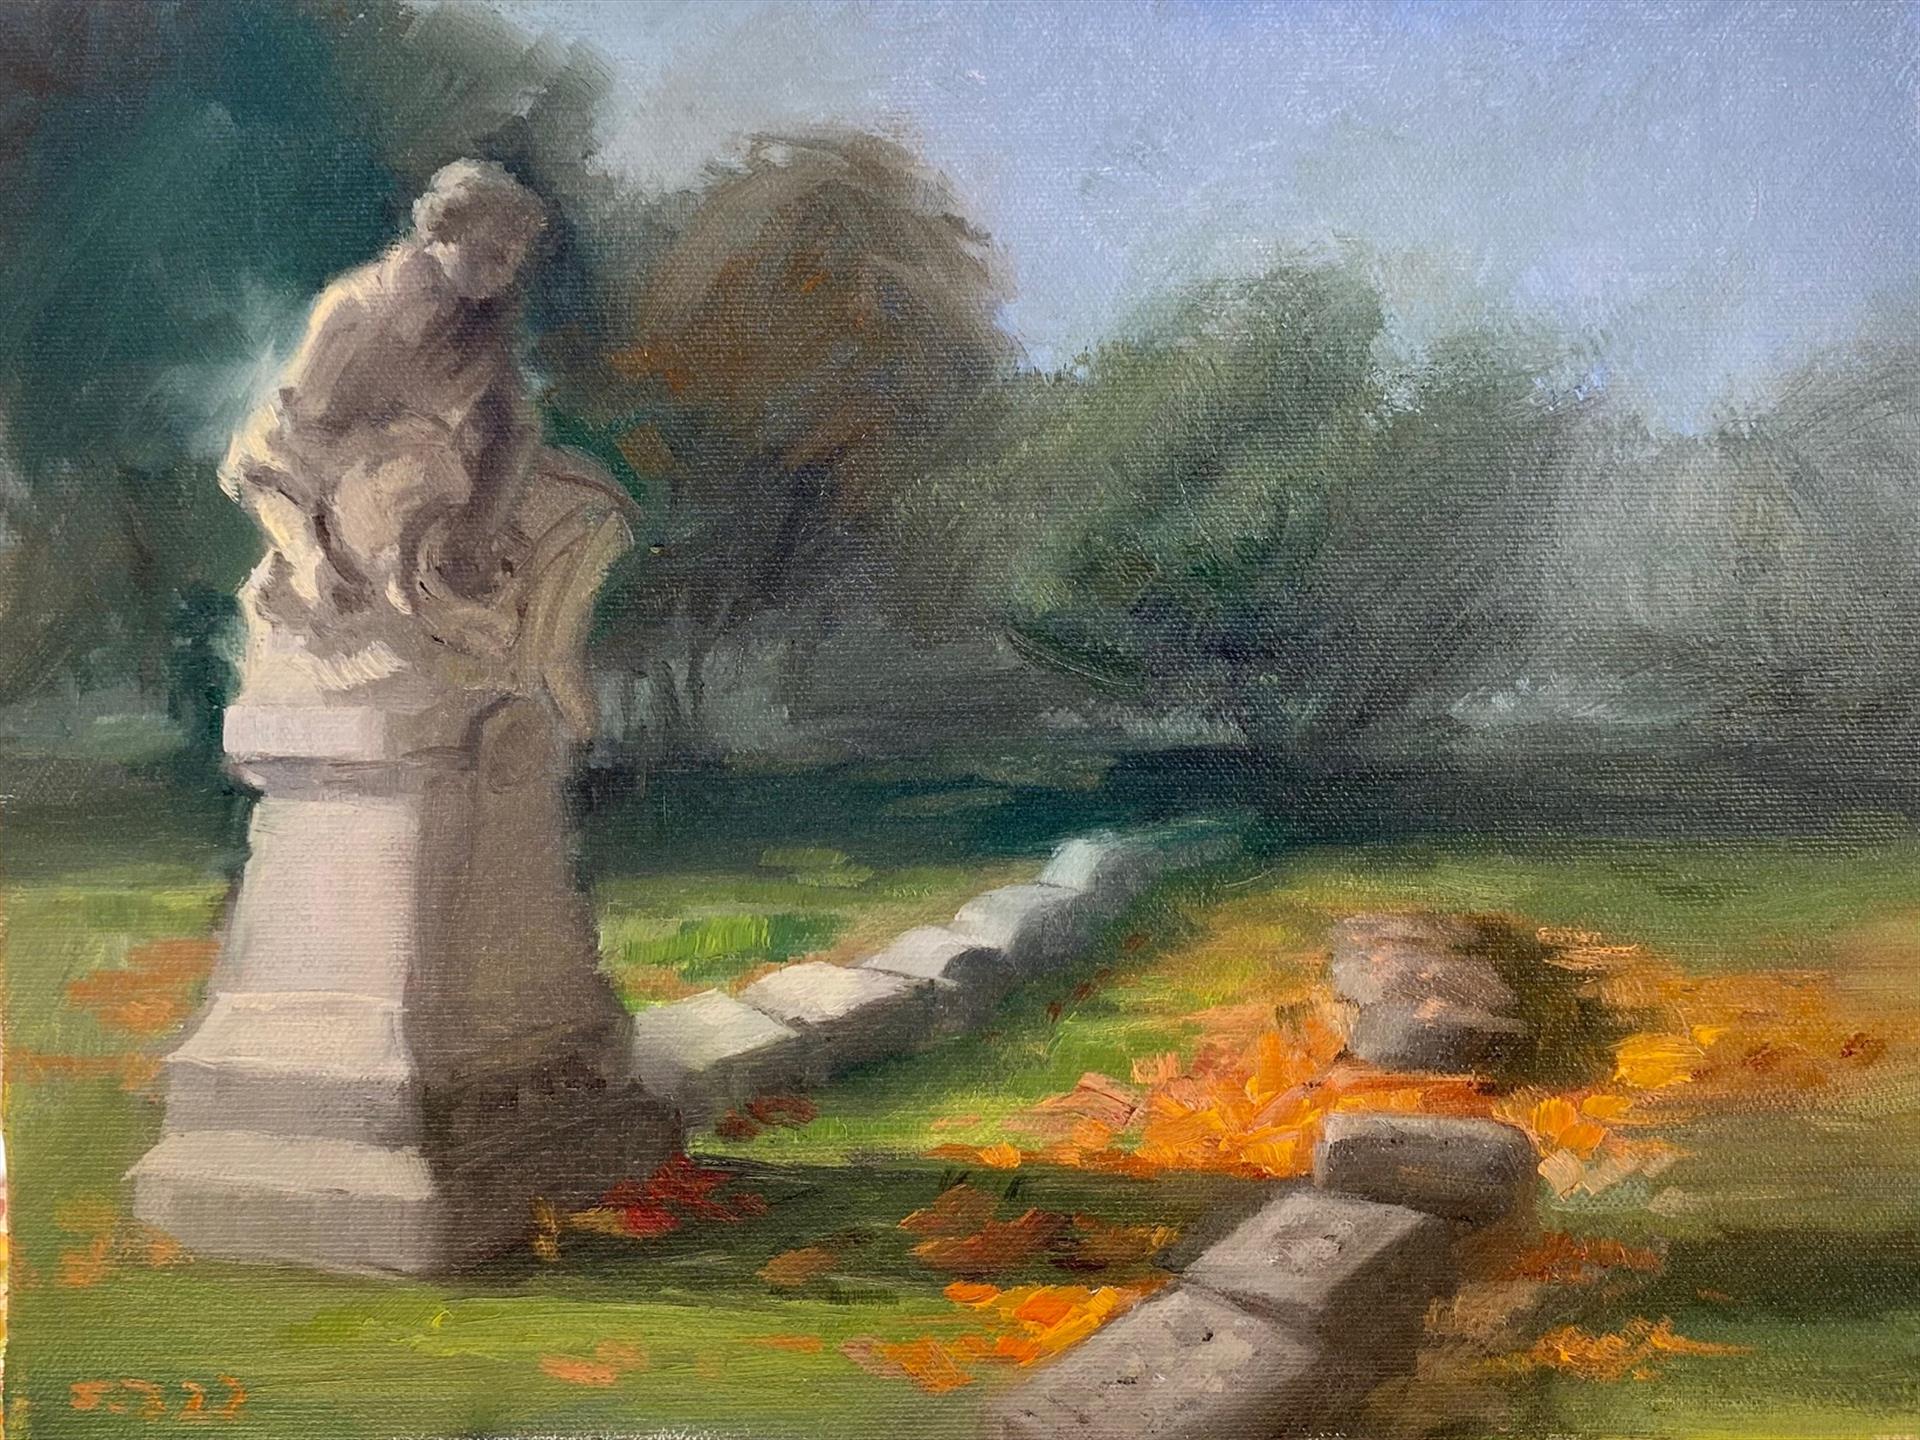 Shannon Burch – Graceland Cemetery, Fall